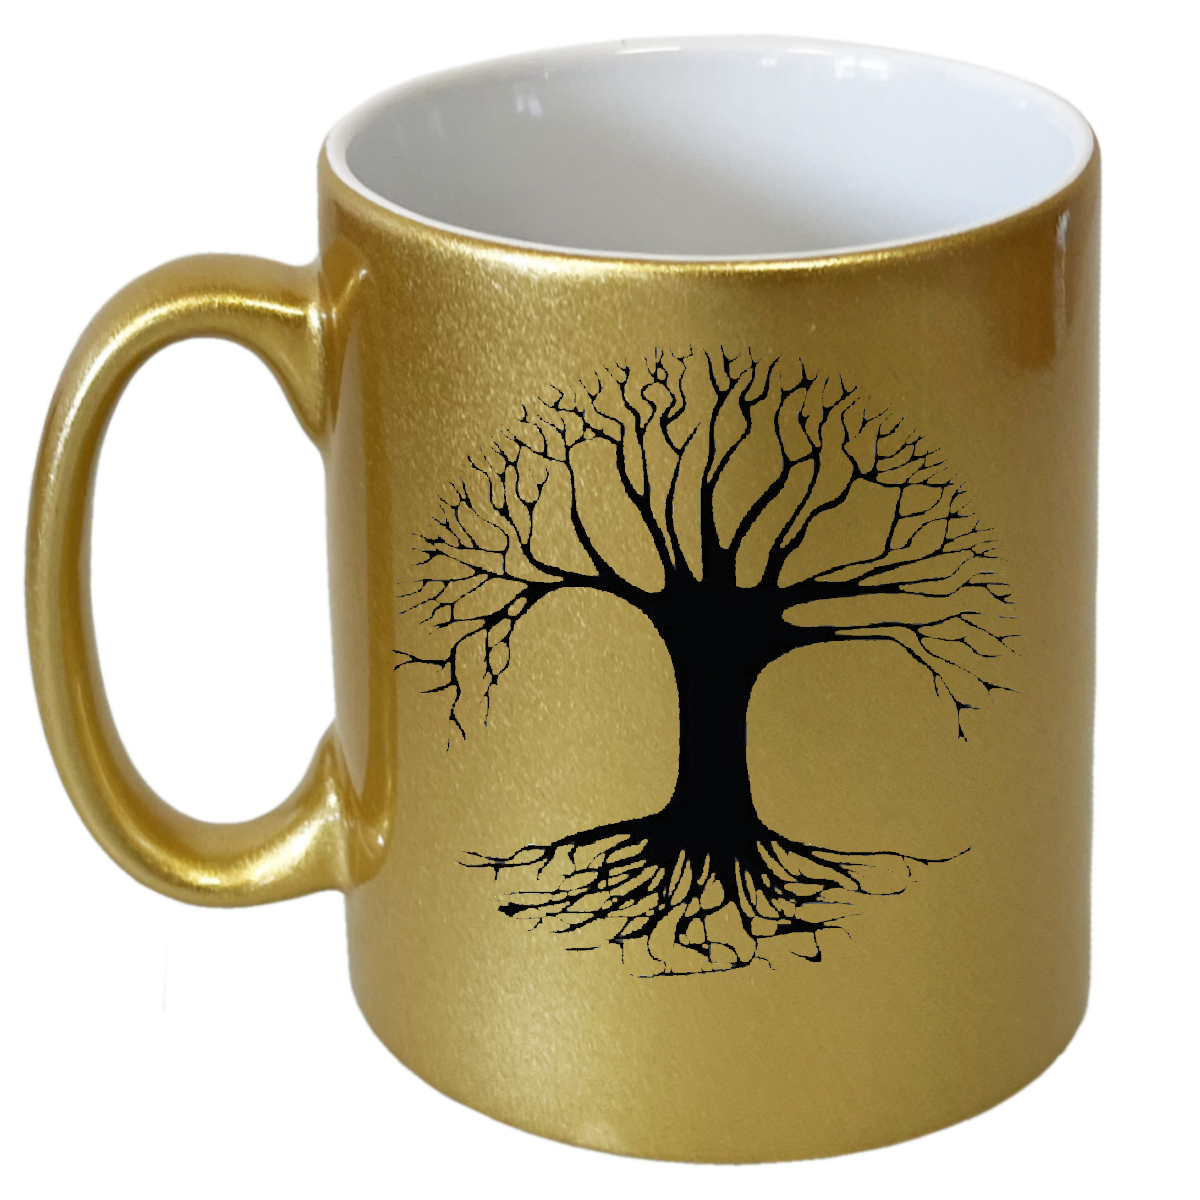 Golden ceramic Tree of Life mug by Cbkreation